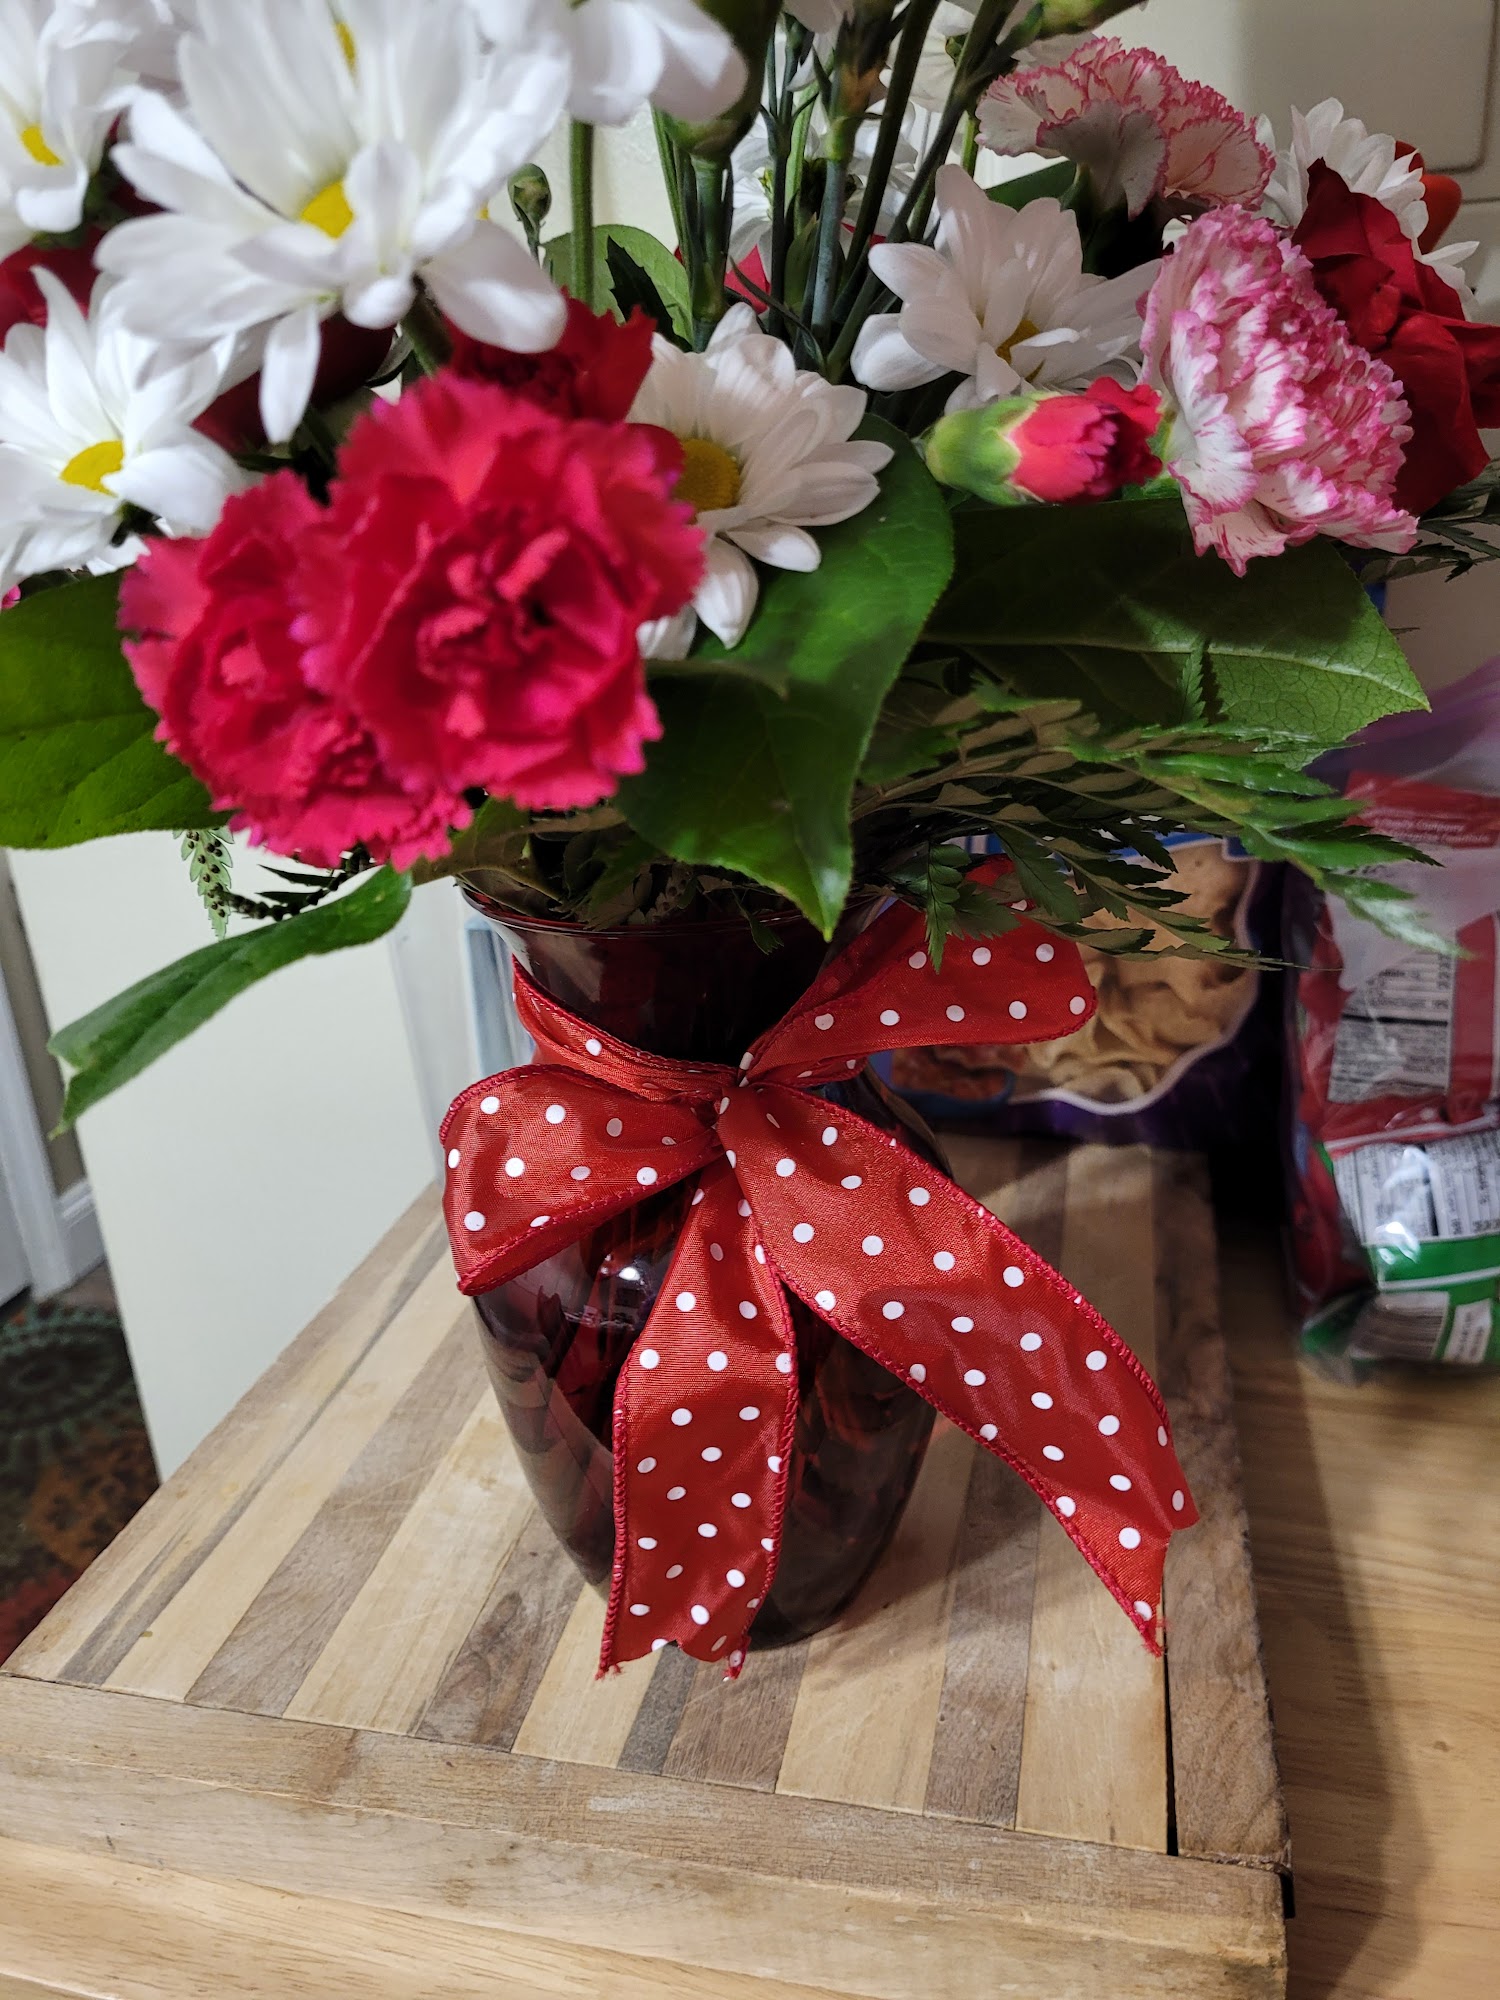 Brenda's Flowers & Gifts